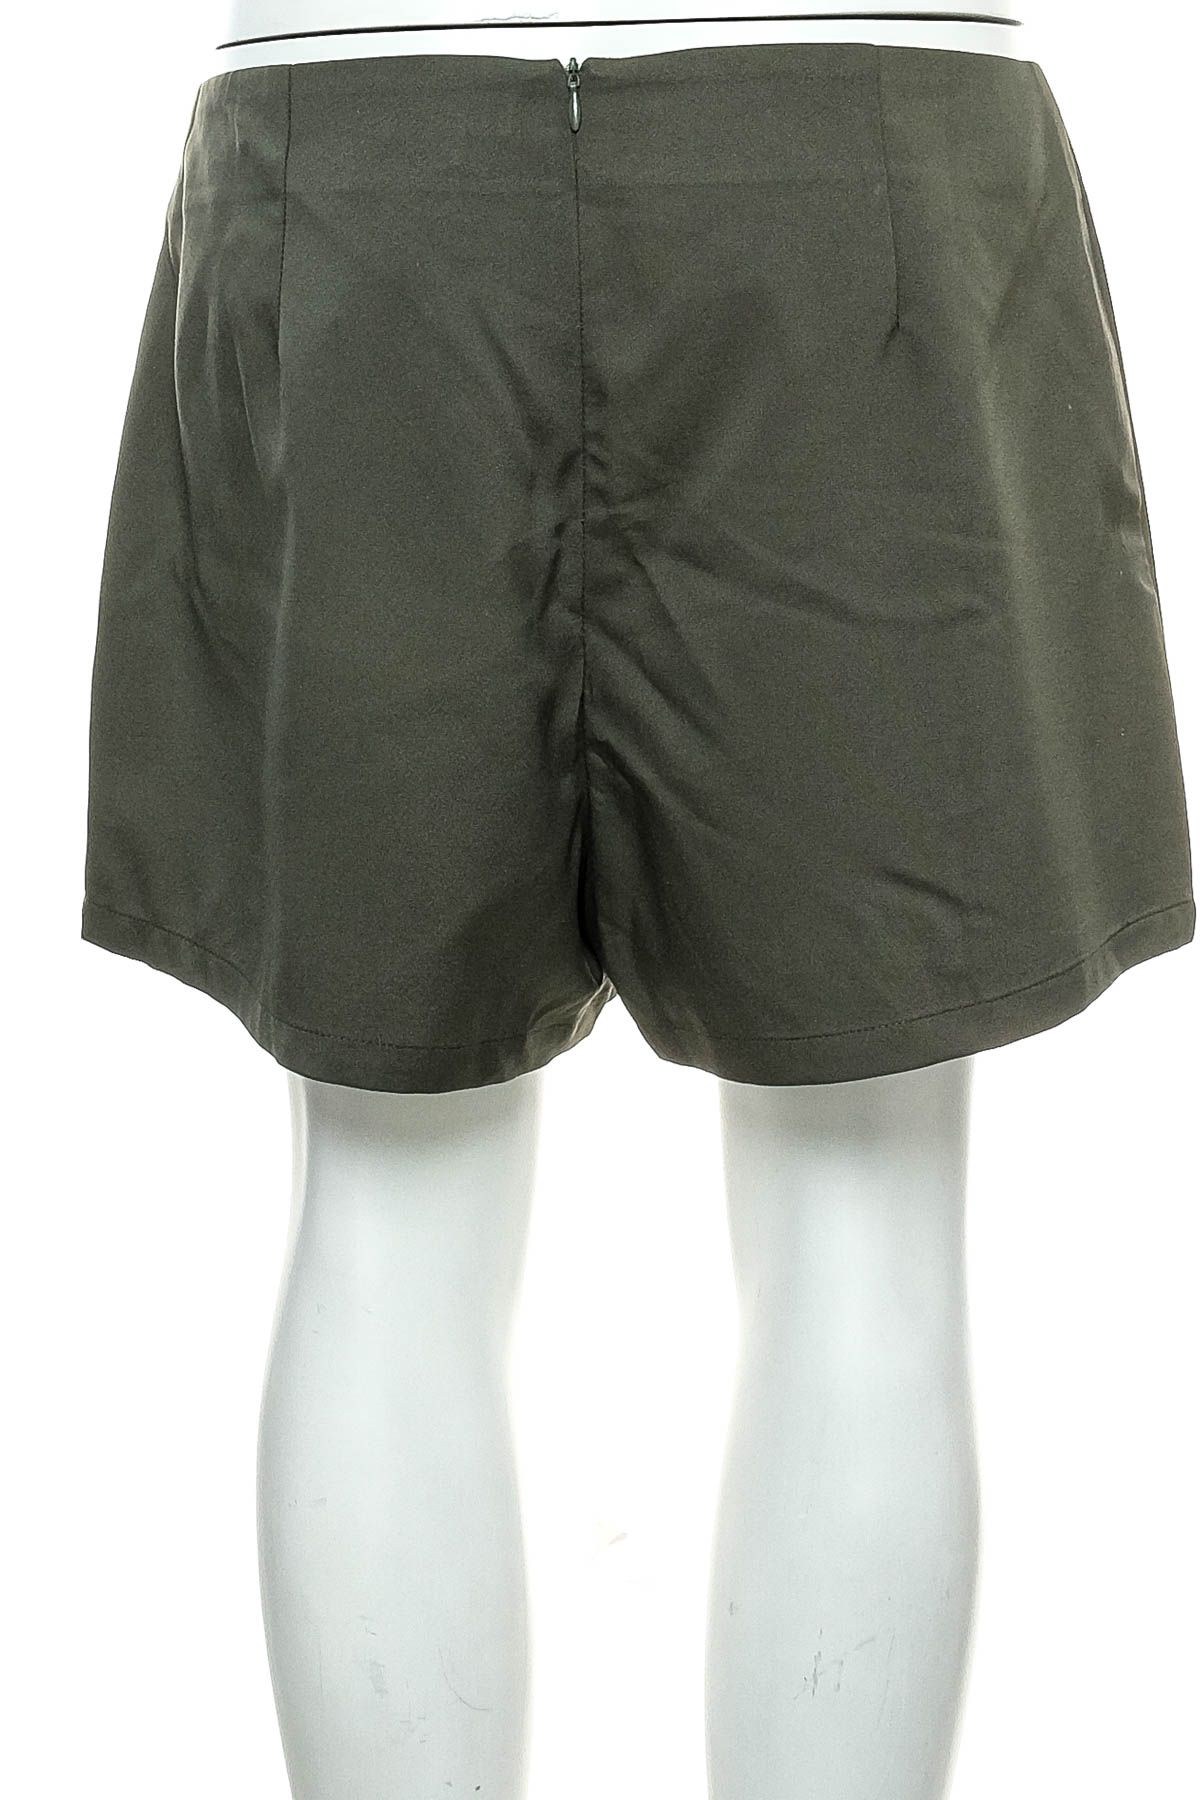 Female shorts - Love, Bonito - 1